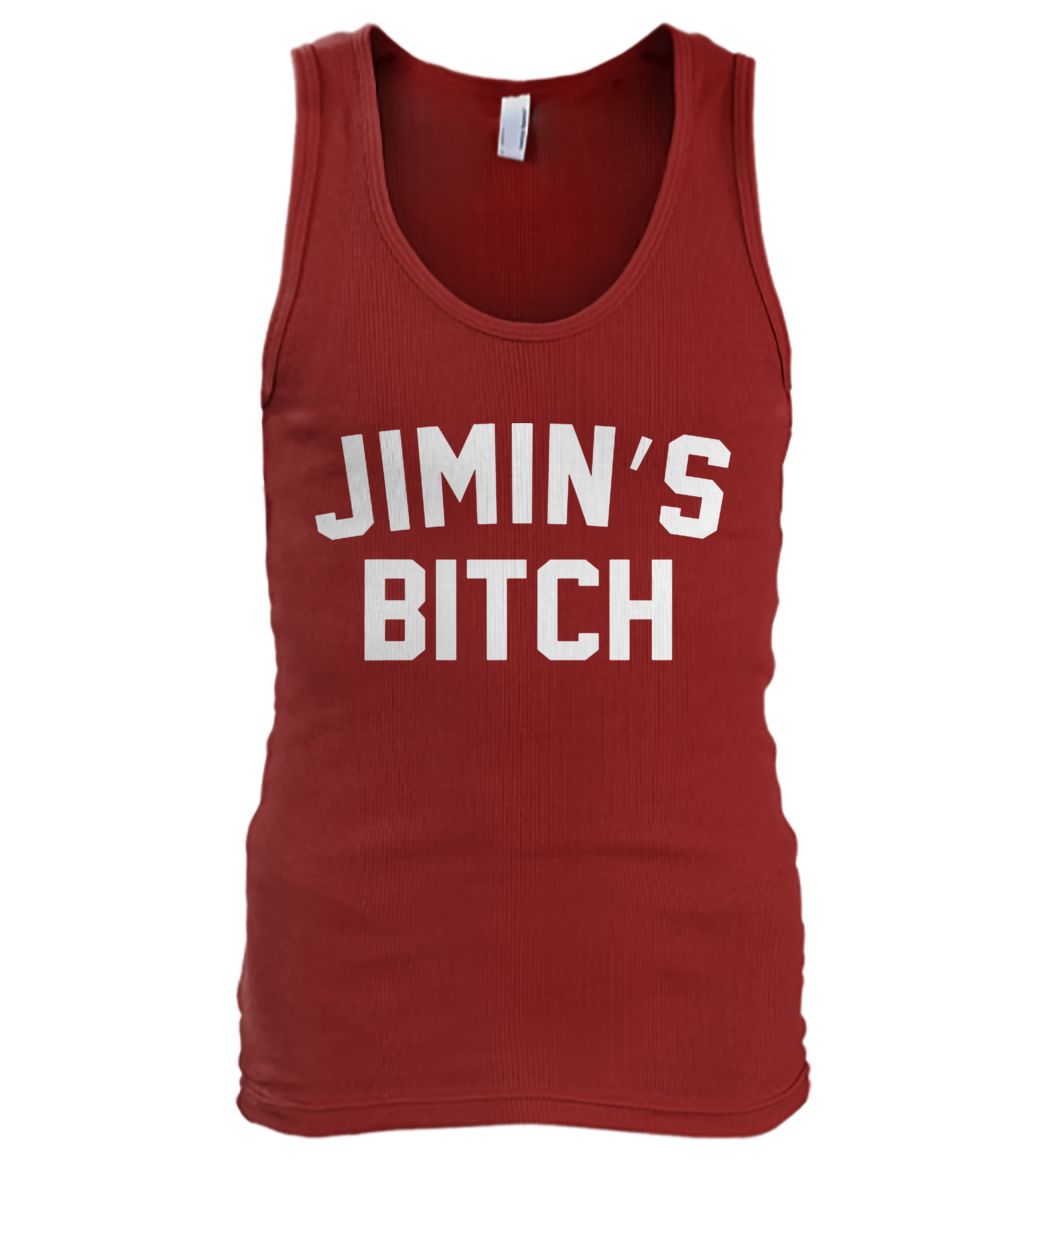 Official Jimin's bitch men's tank top